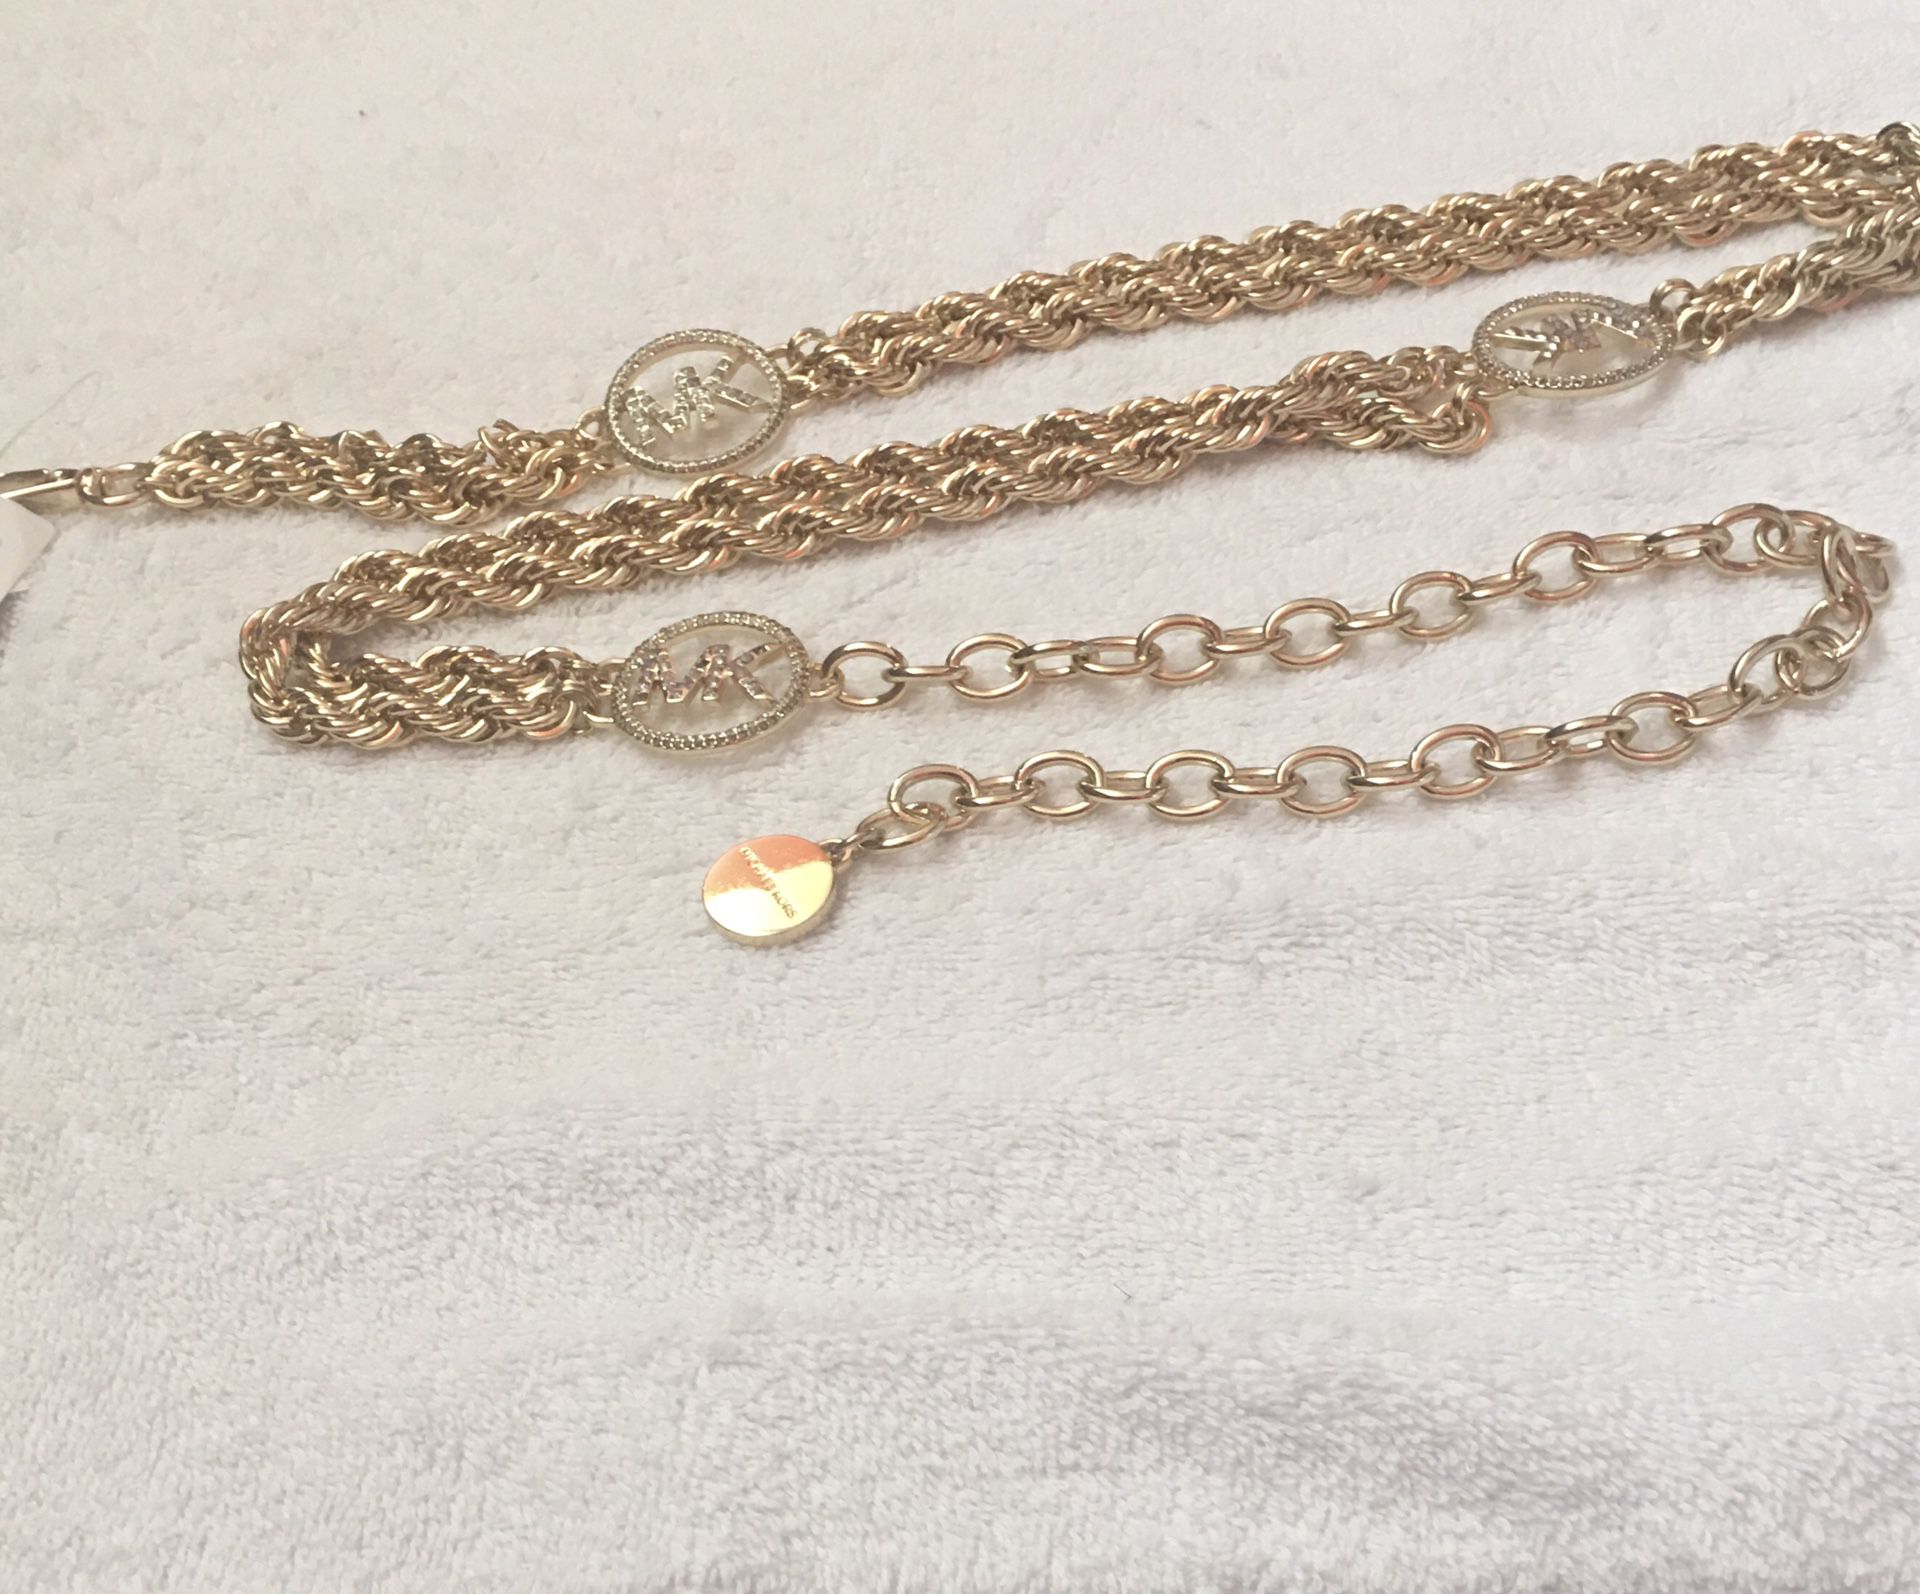 Michael Kors gold chain belt size Small/Medium